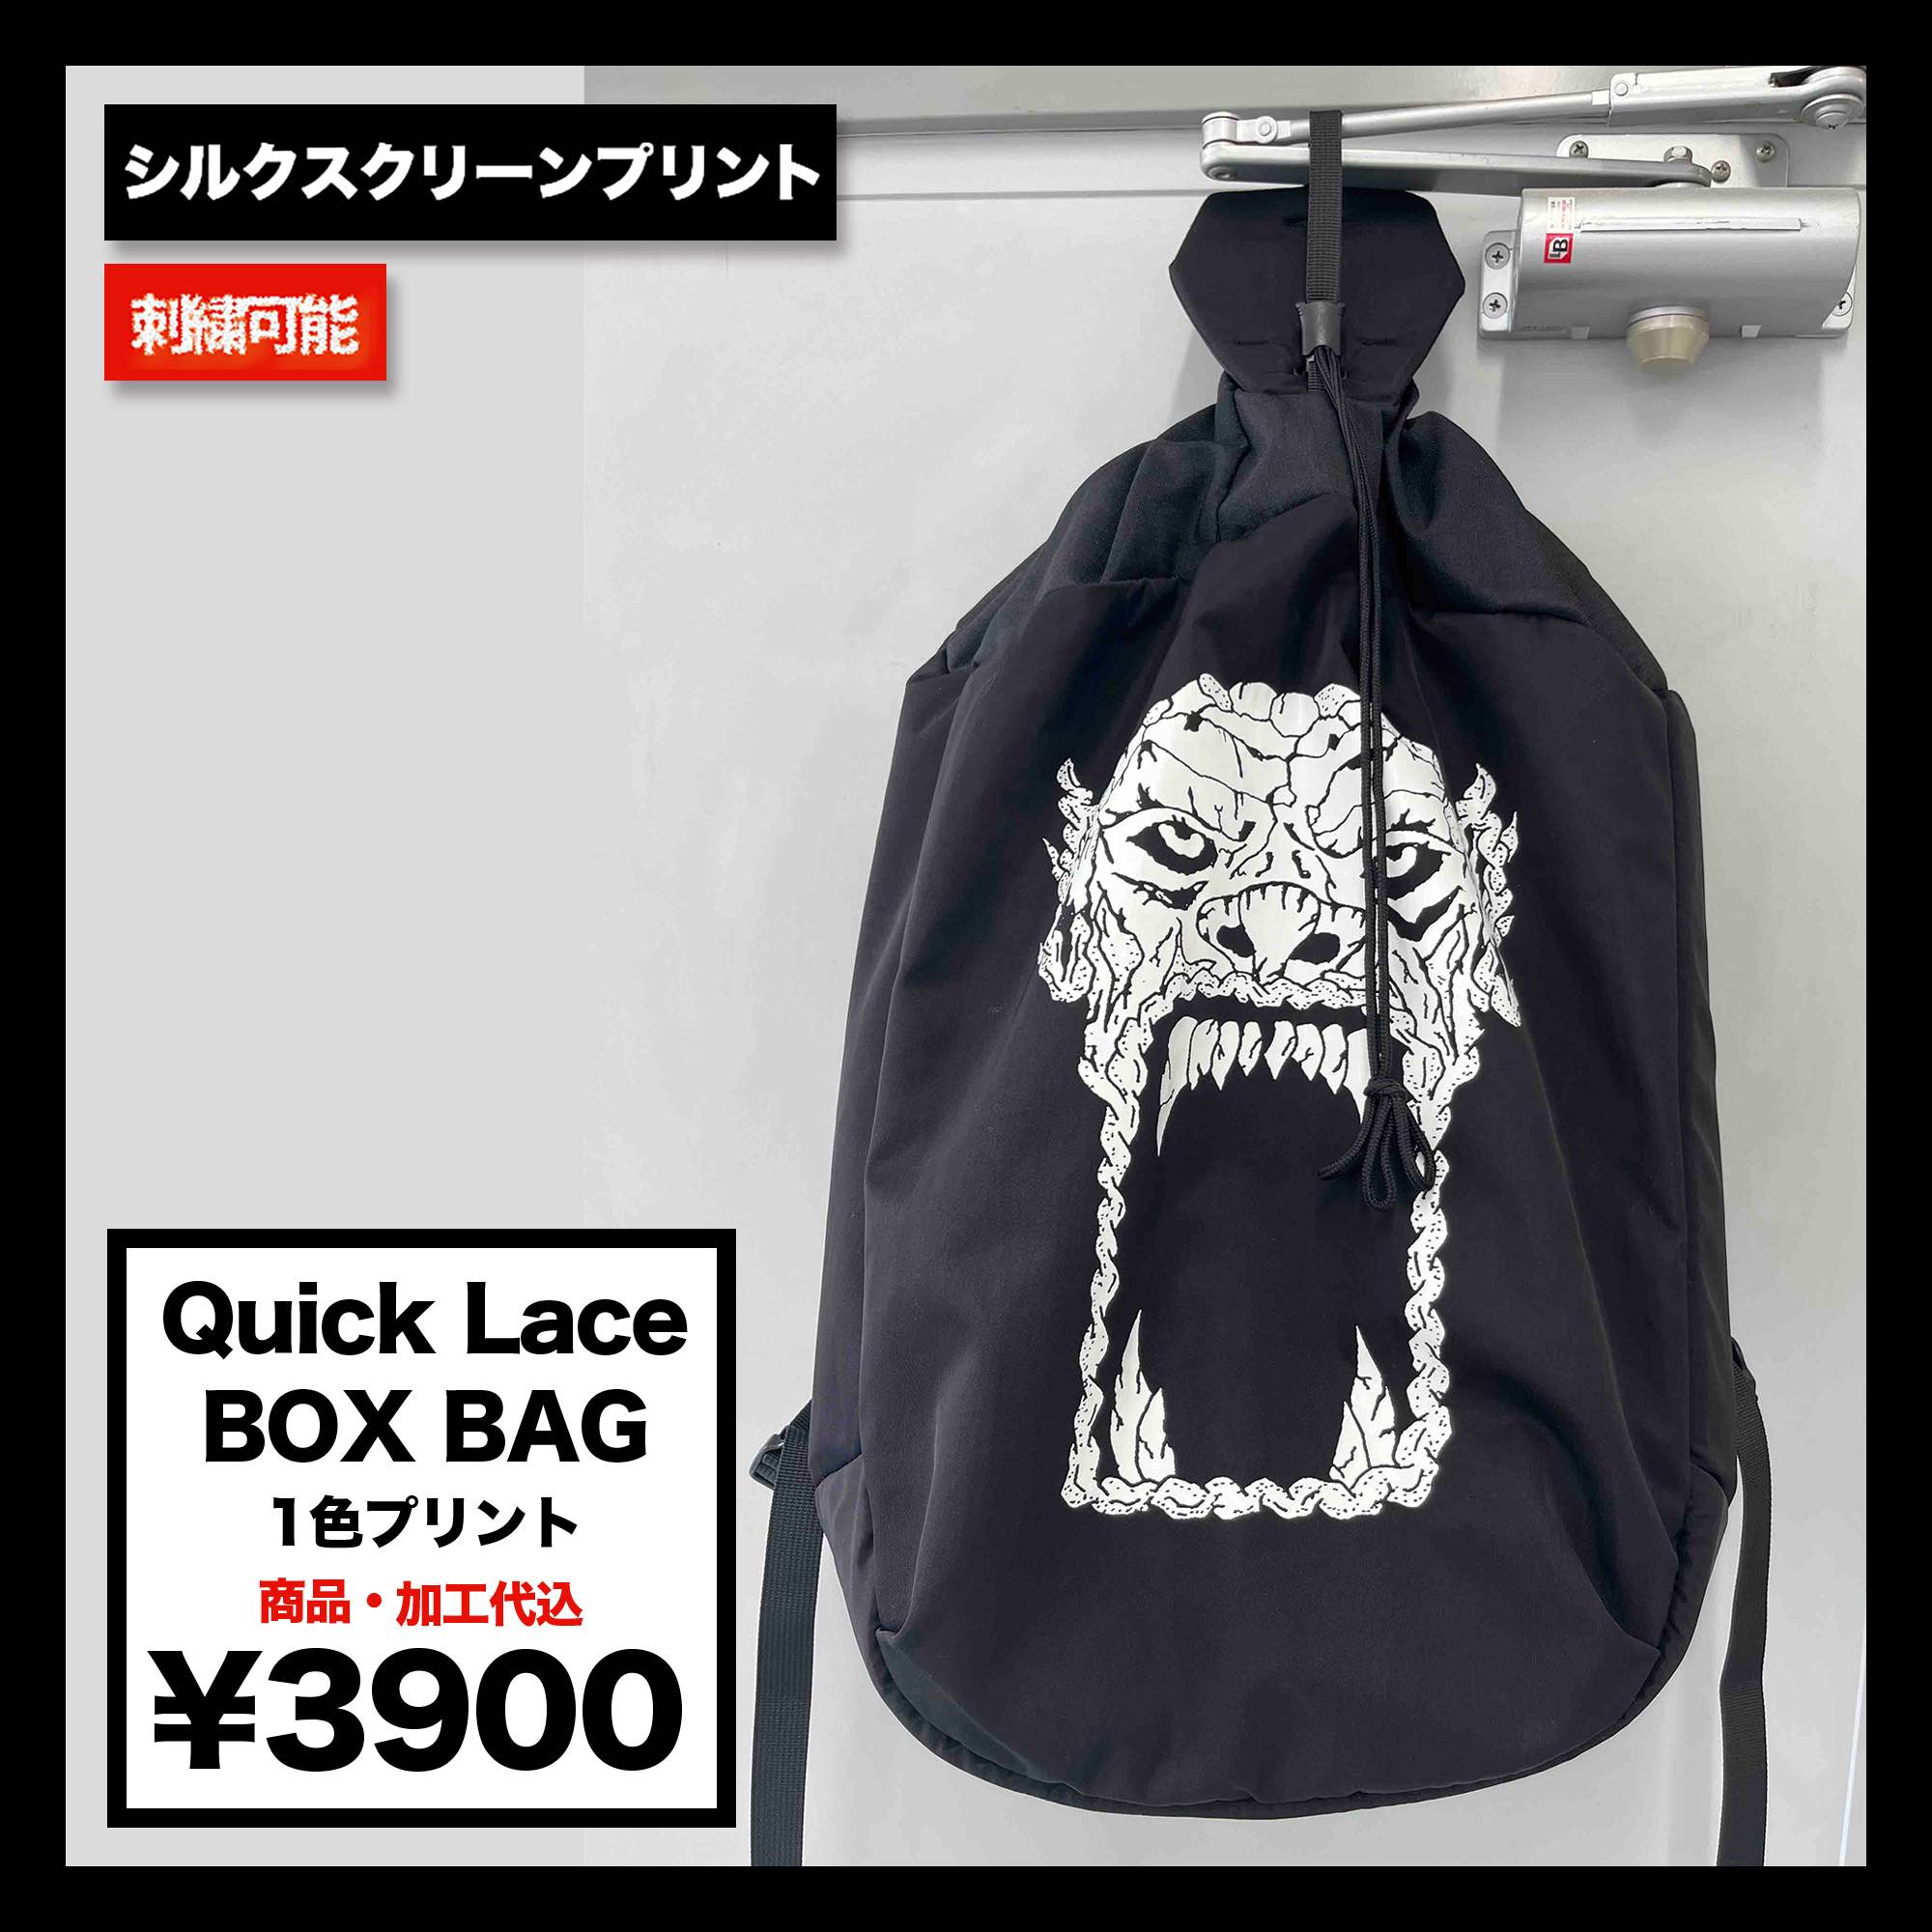 Quick Lace BOX BAG (品番CPQL)